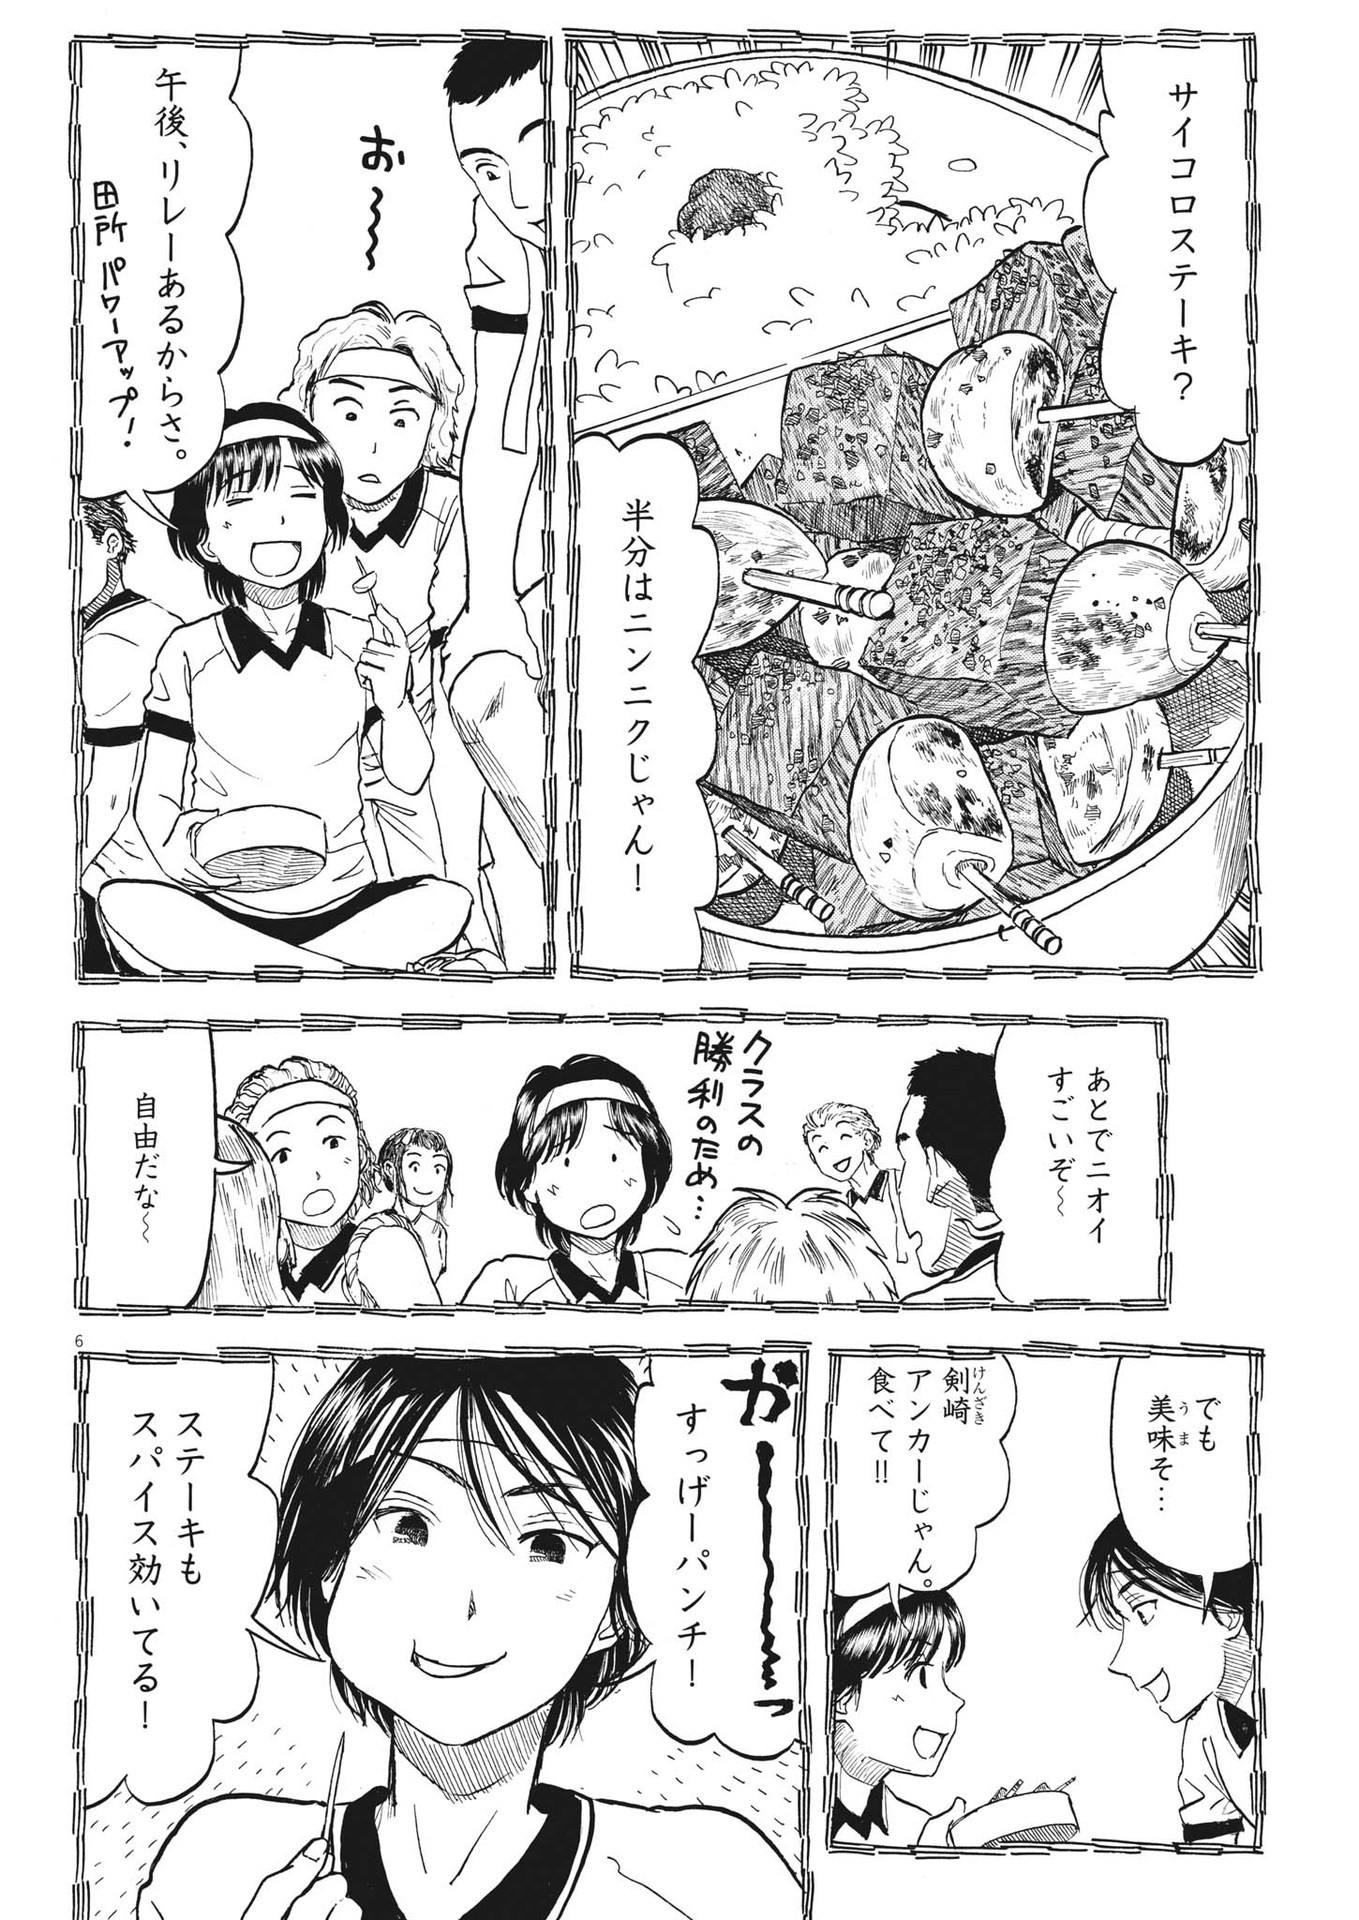 Komegura Fuufu no Recipe-chou - Chapter 30 - Page 6